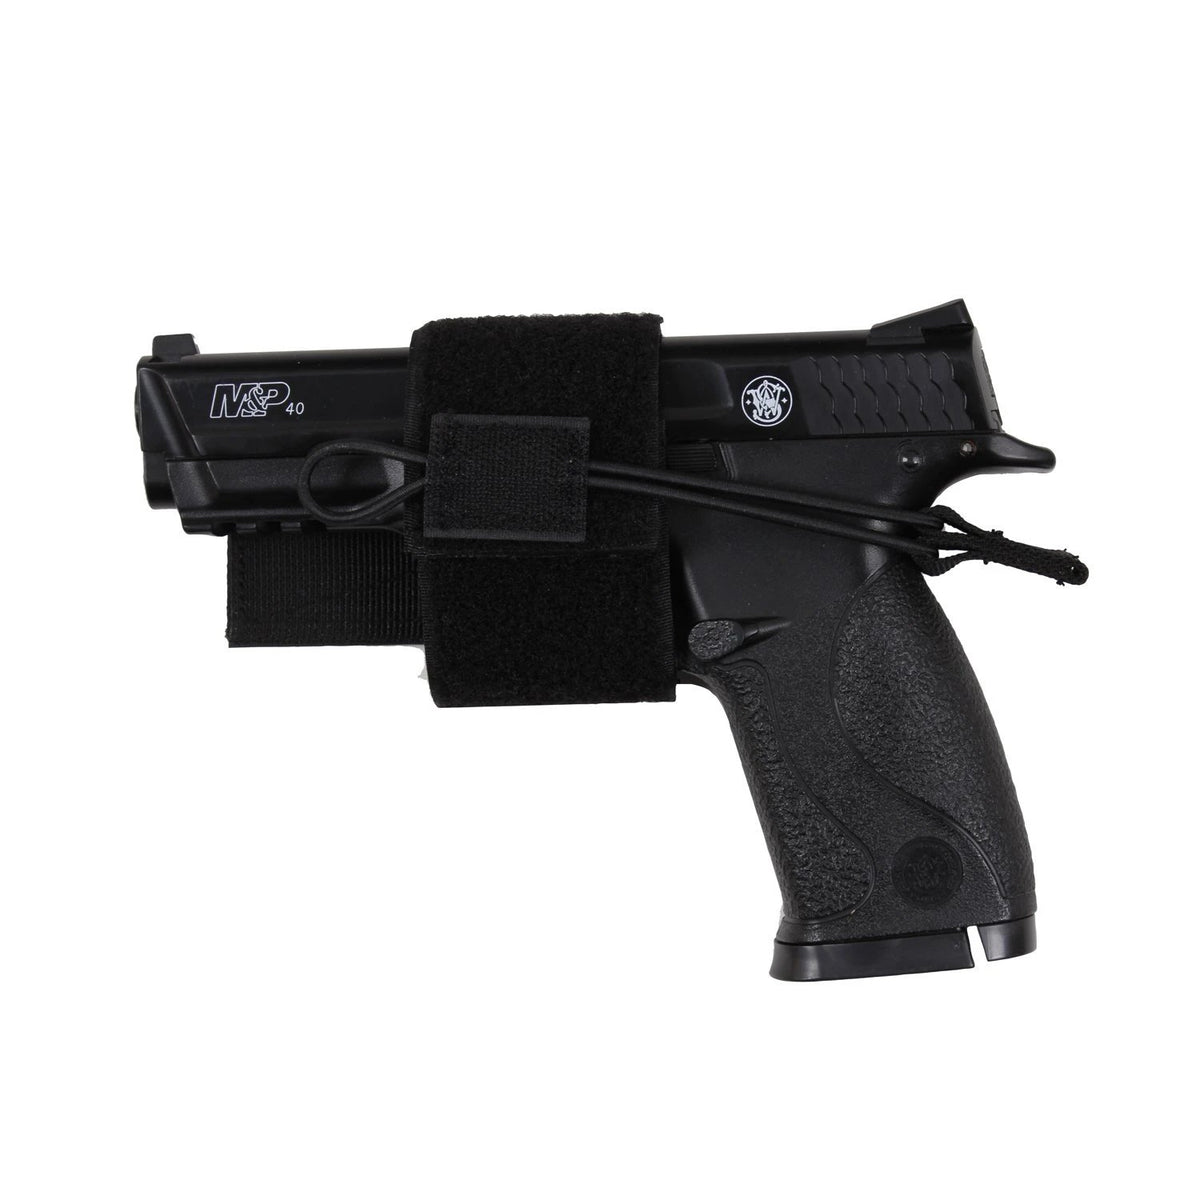 Universal Shoulder Gun Holster Concealed Carry For Adult Fit All Firearms  Black